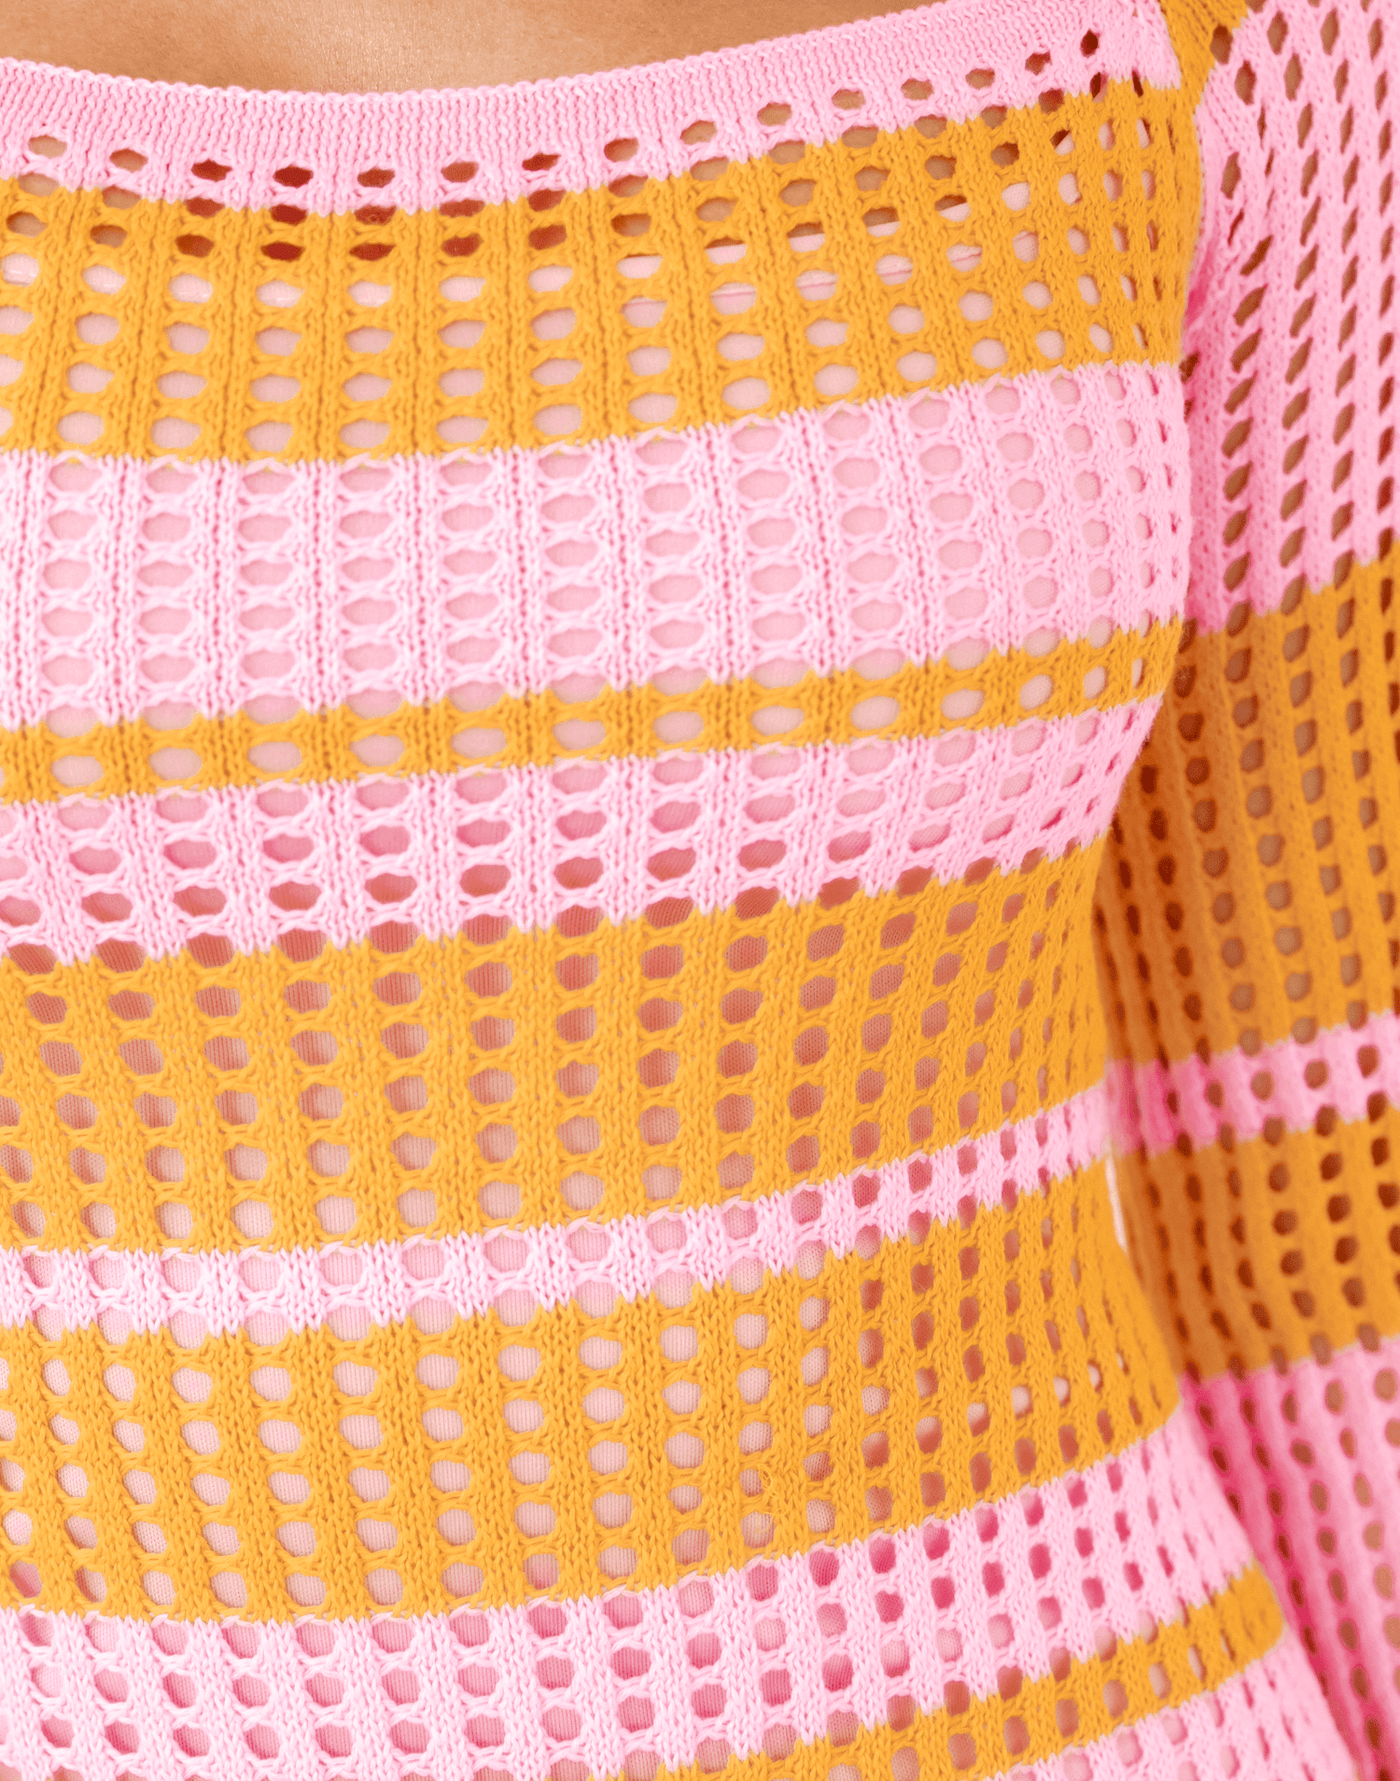 Marley Knit Mini Dress (Pink/Orange) - Knitted Mini Dress - Women's Dress - Charcoal Clothing